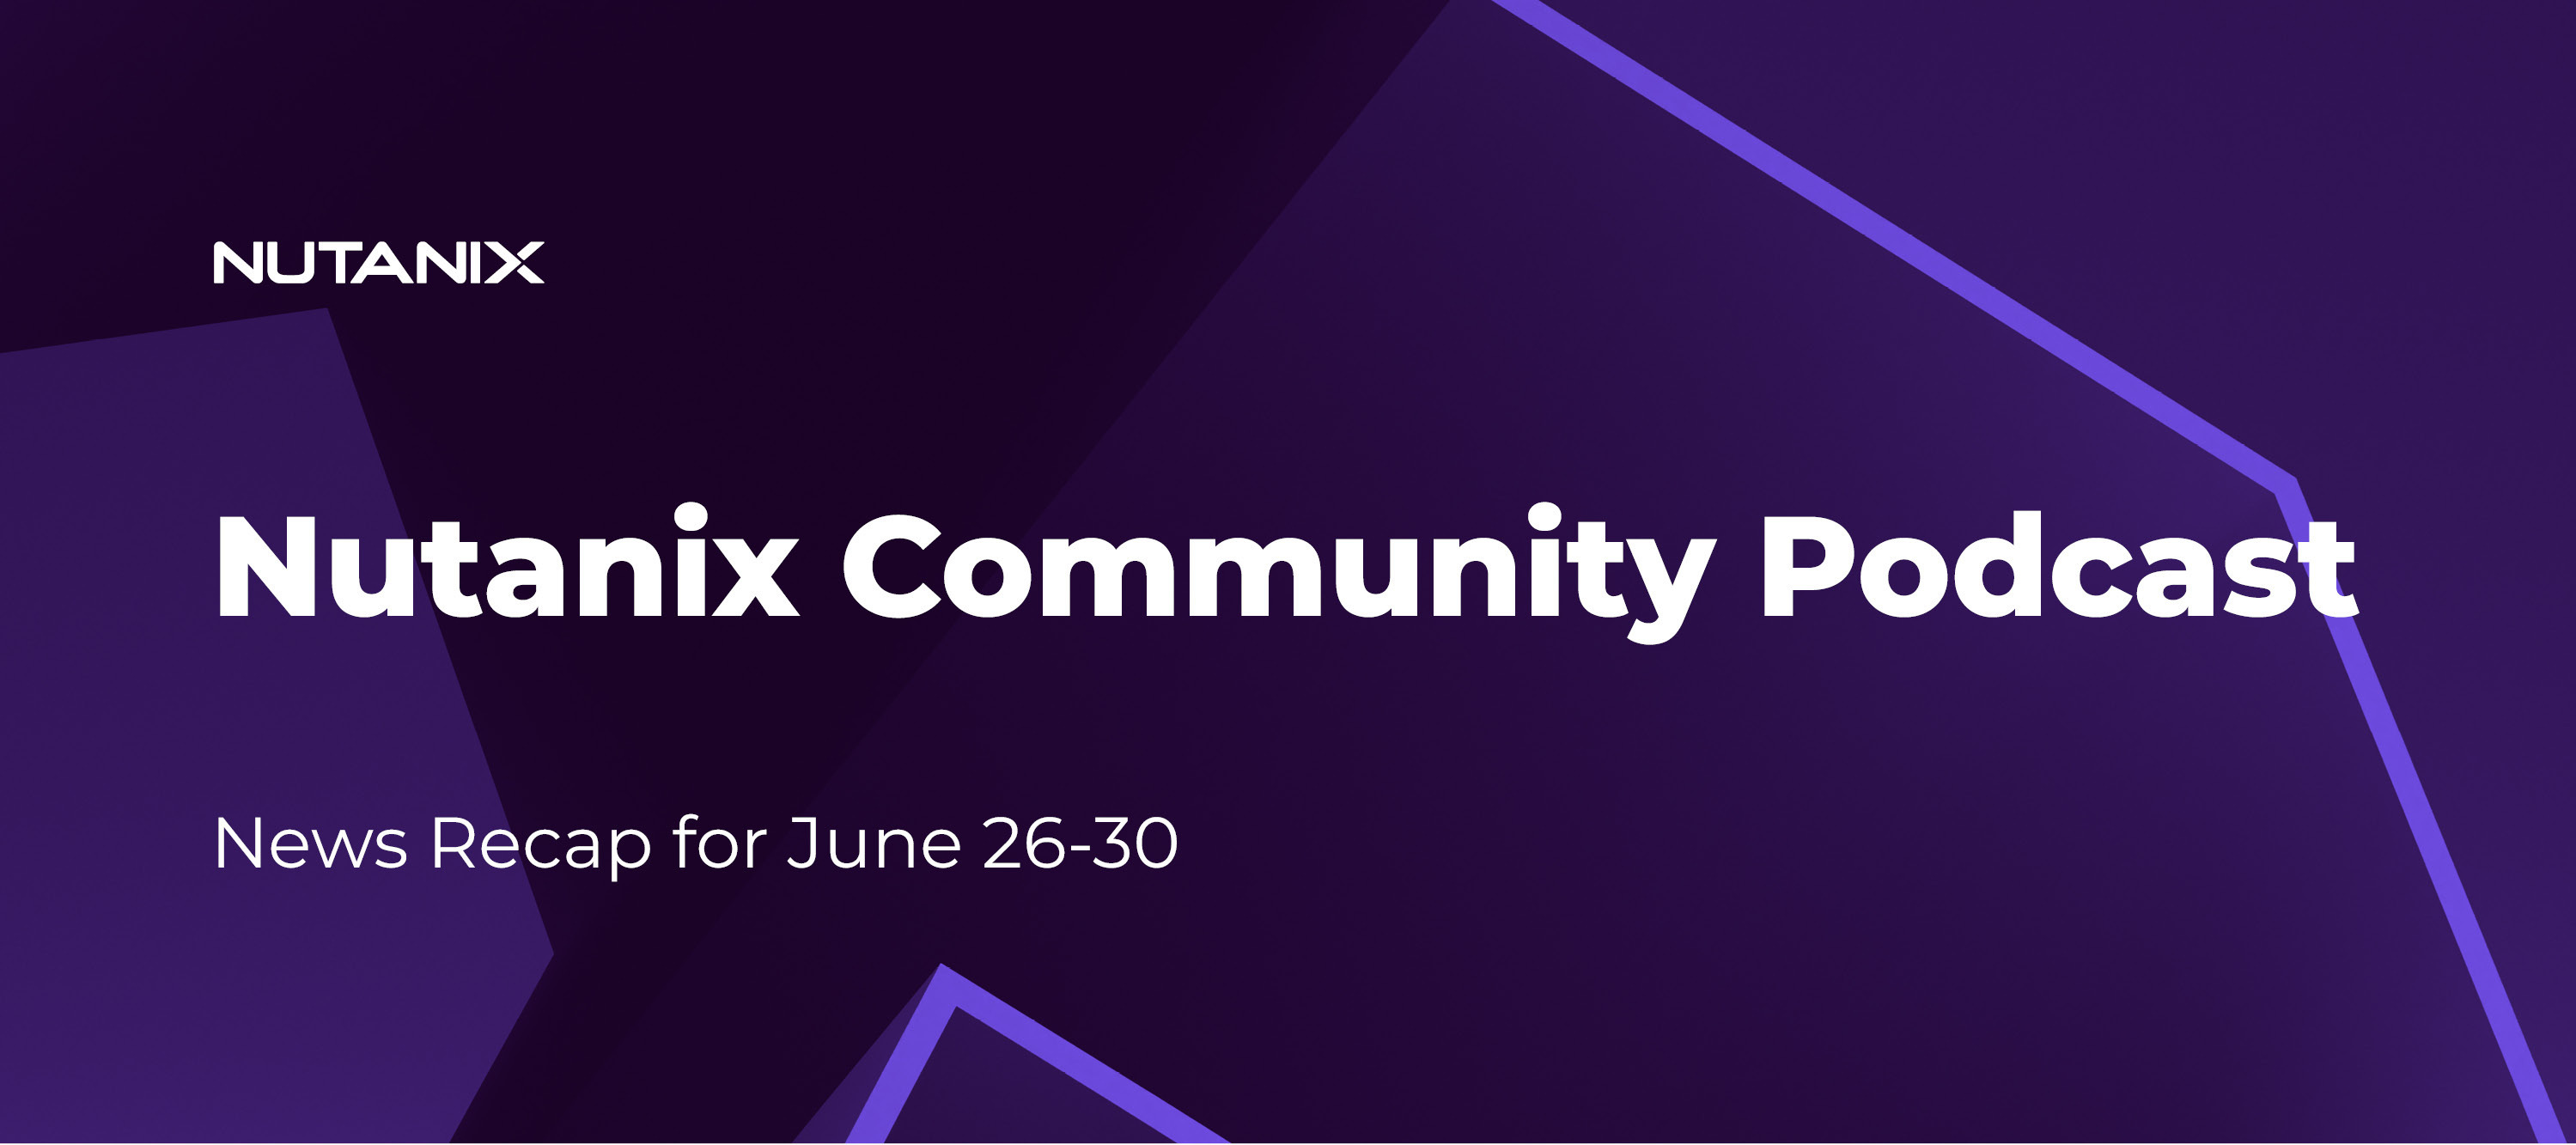 Nutanix Community Podcast: Nutanix News Recap June 26-30